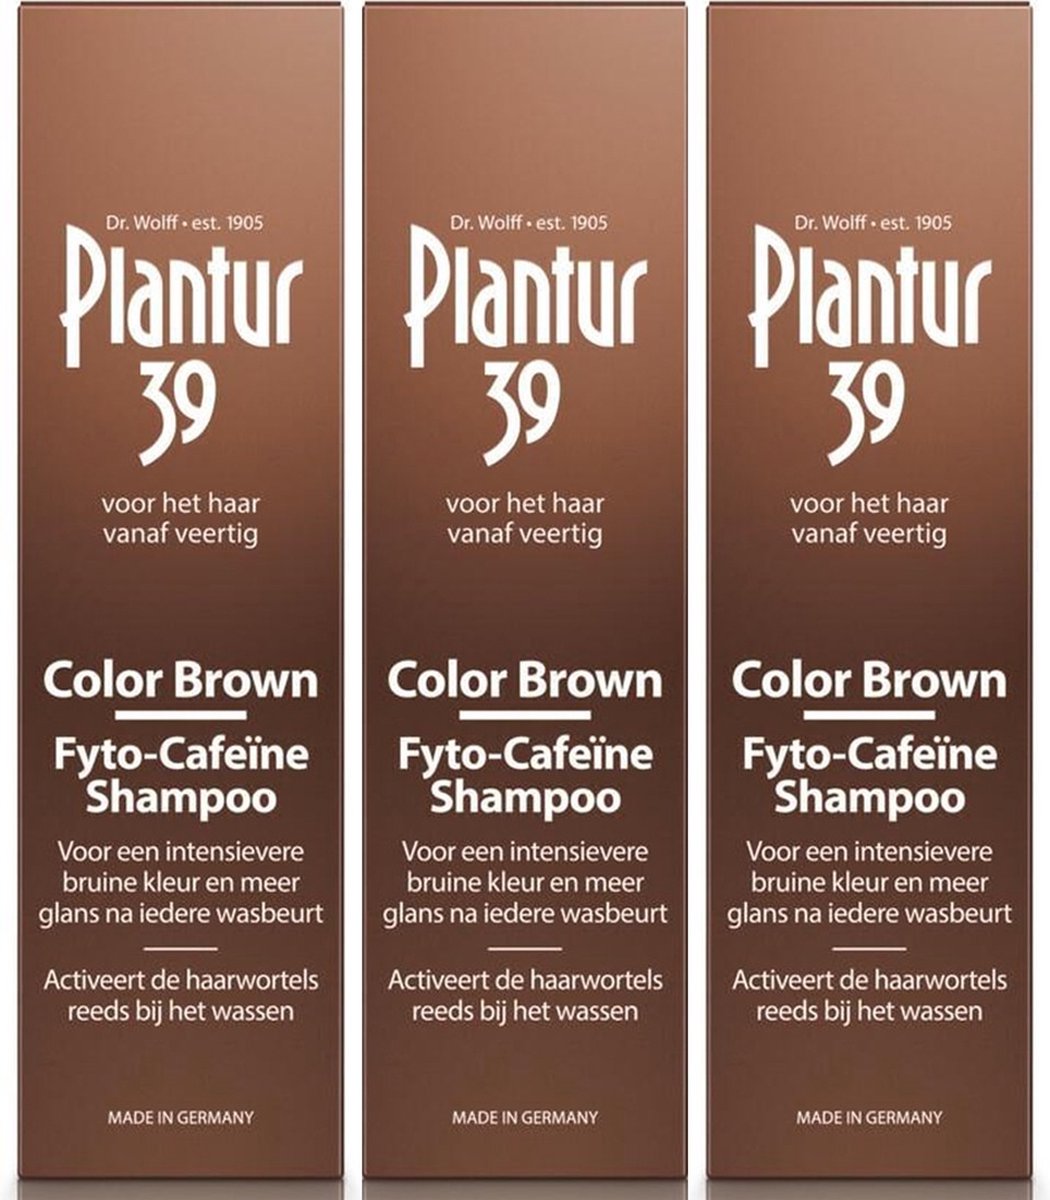 Plantur39 Color Brown Shampoo Voor Bruin Haar - Multi Pack - 3 x 250 ml